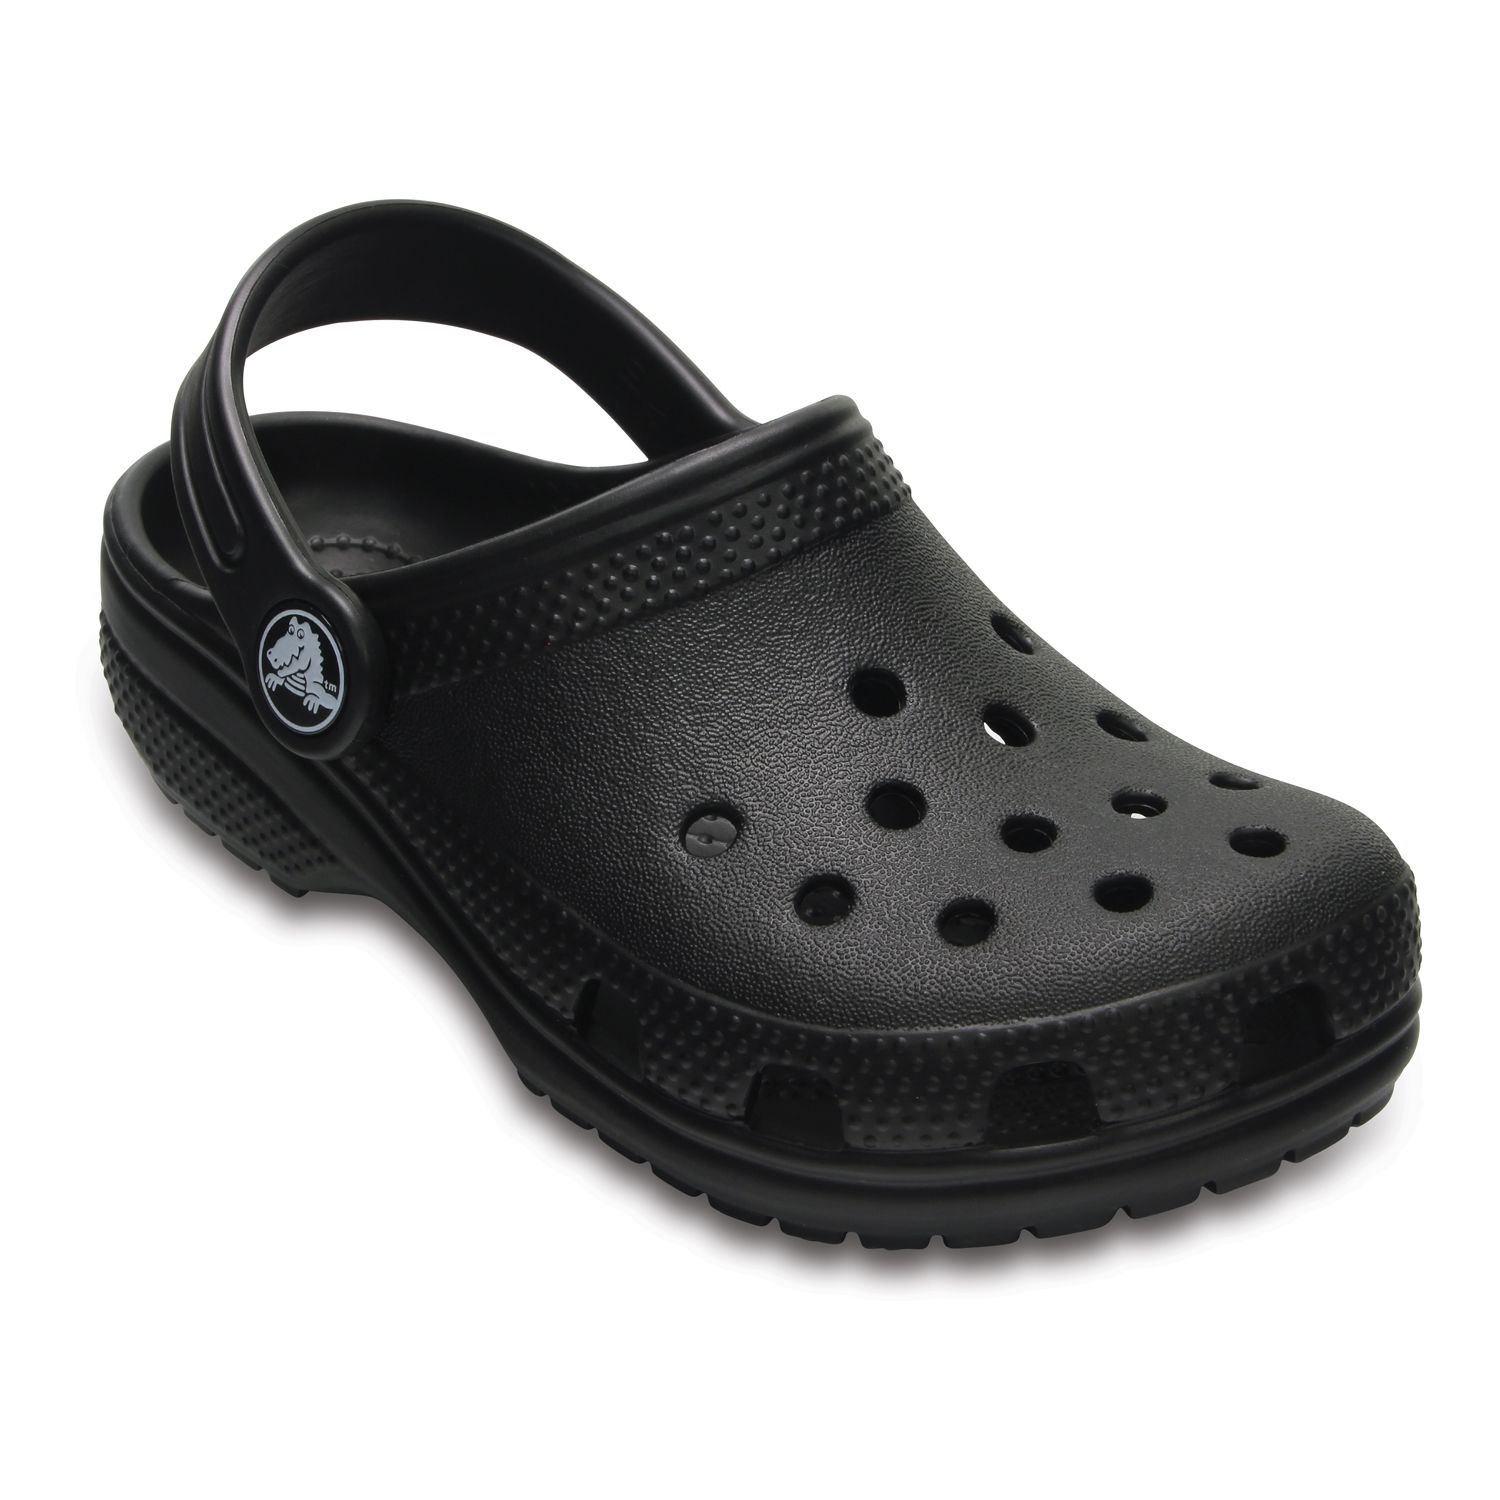 crocs size 11 toddler